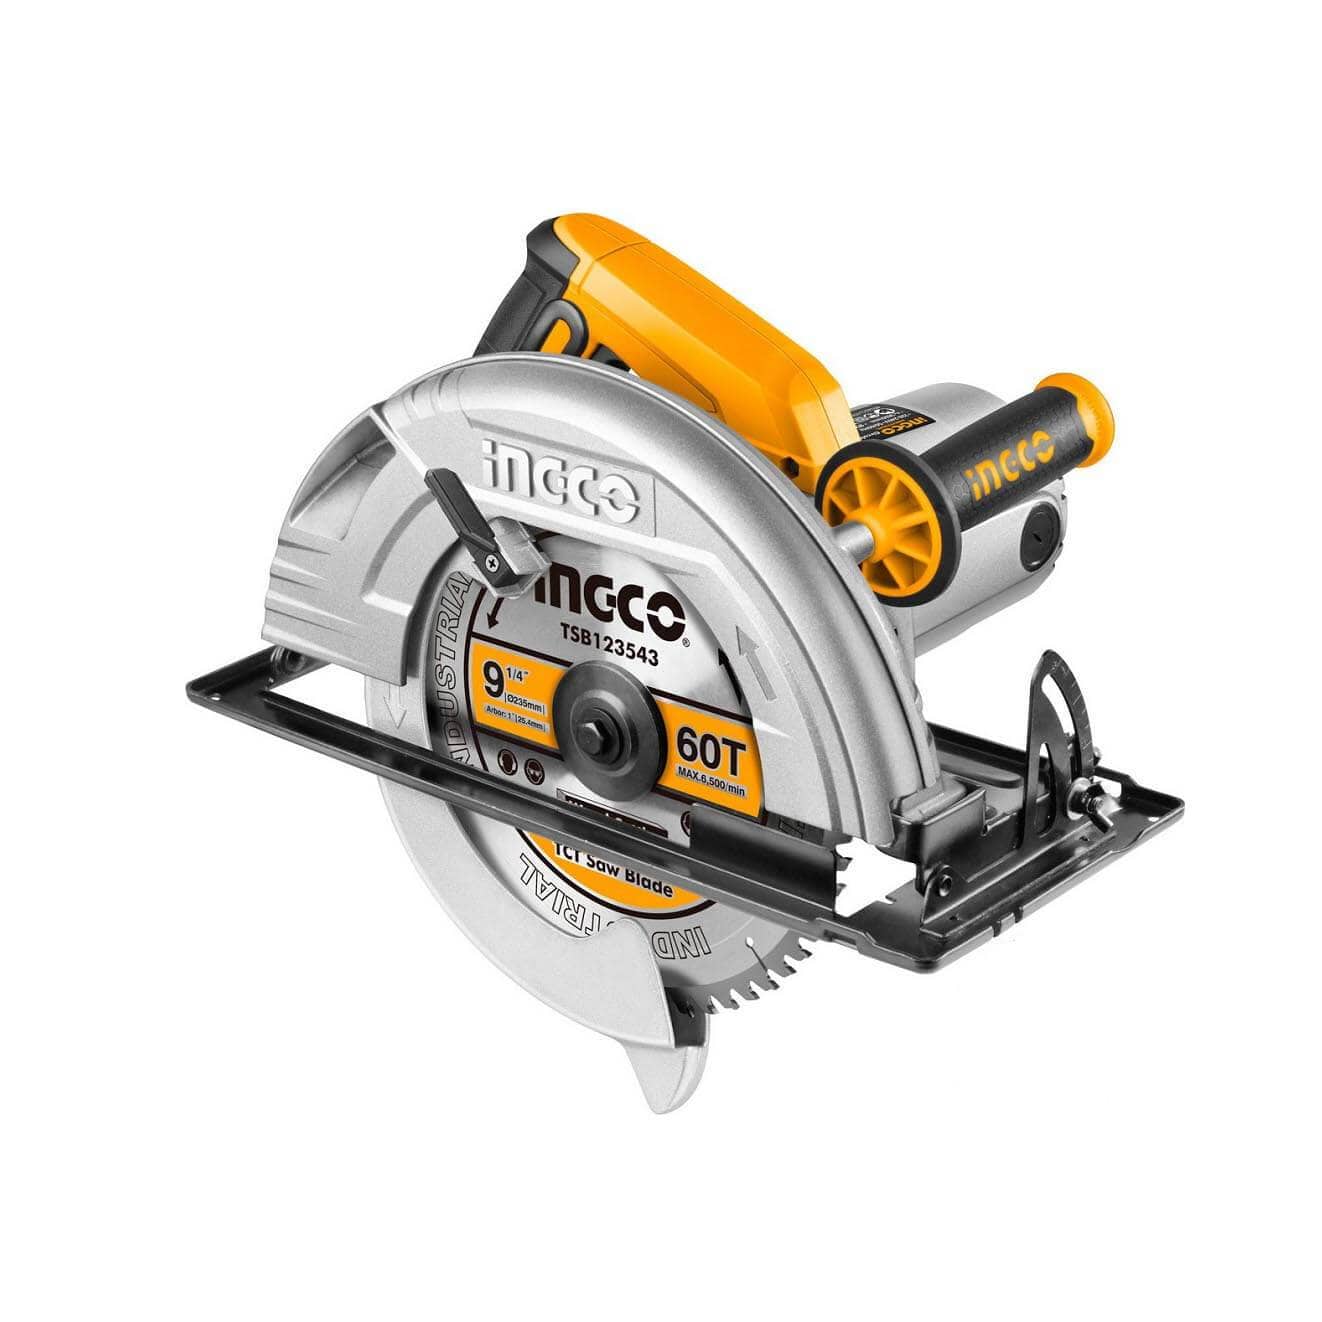 Ingco 9″ Circular Saw 2200W - CS2358 supply-master